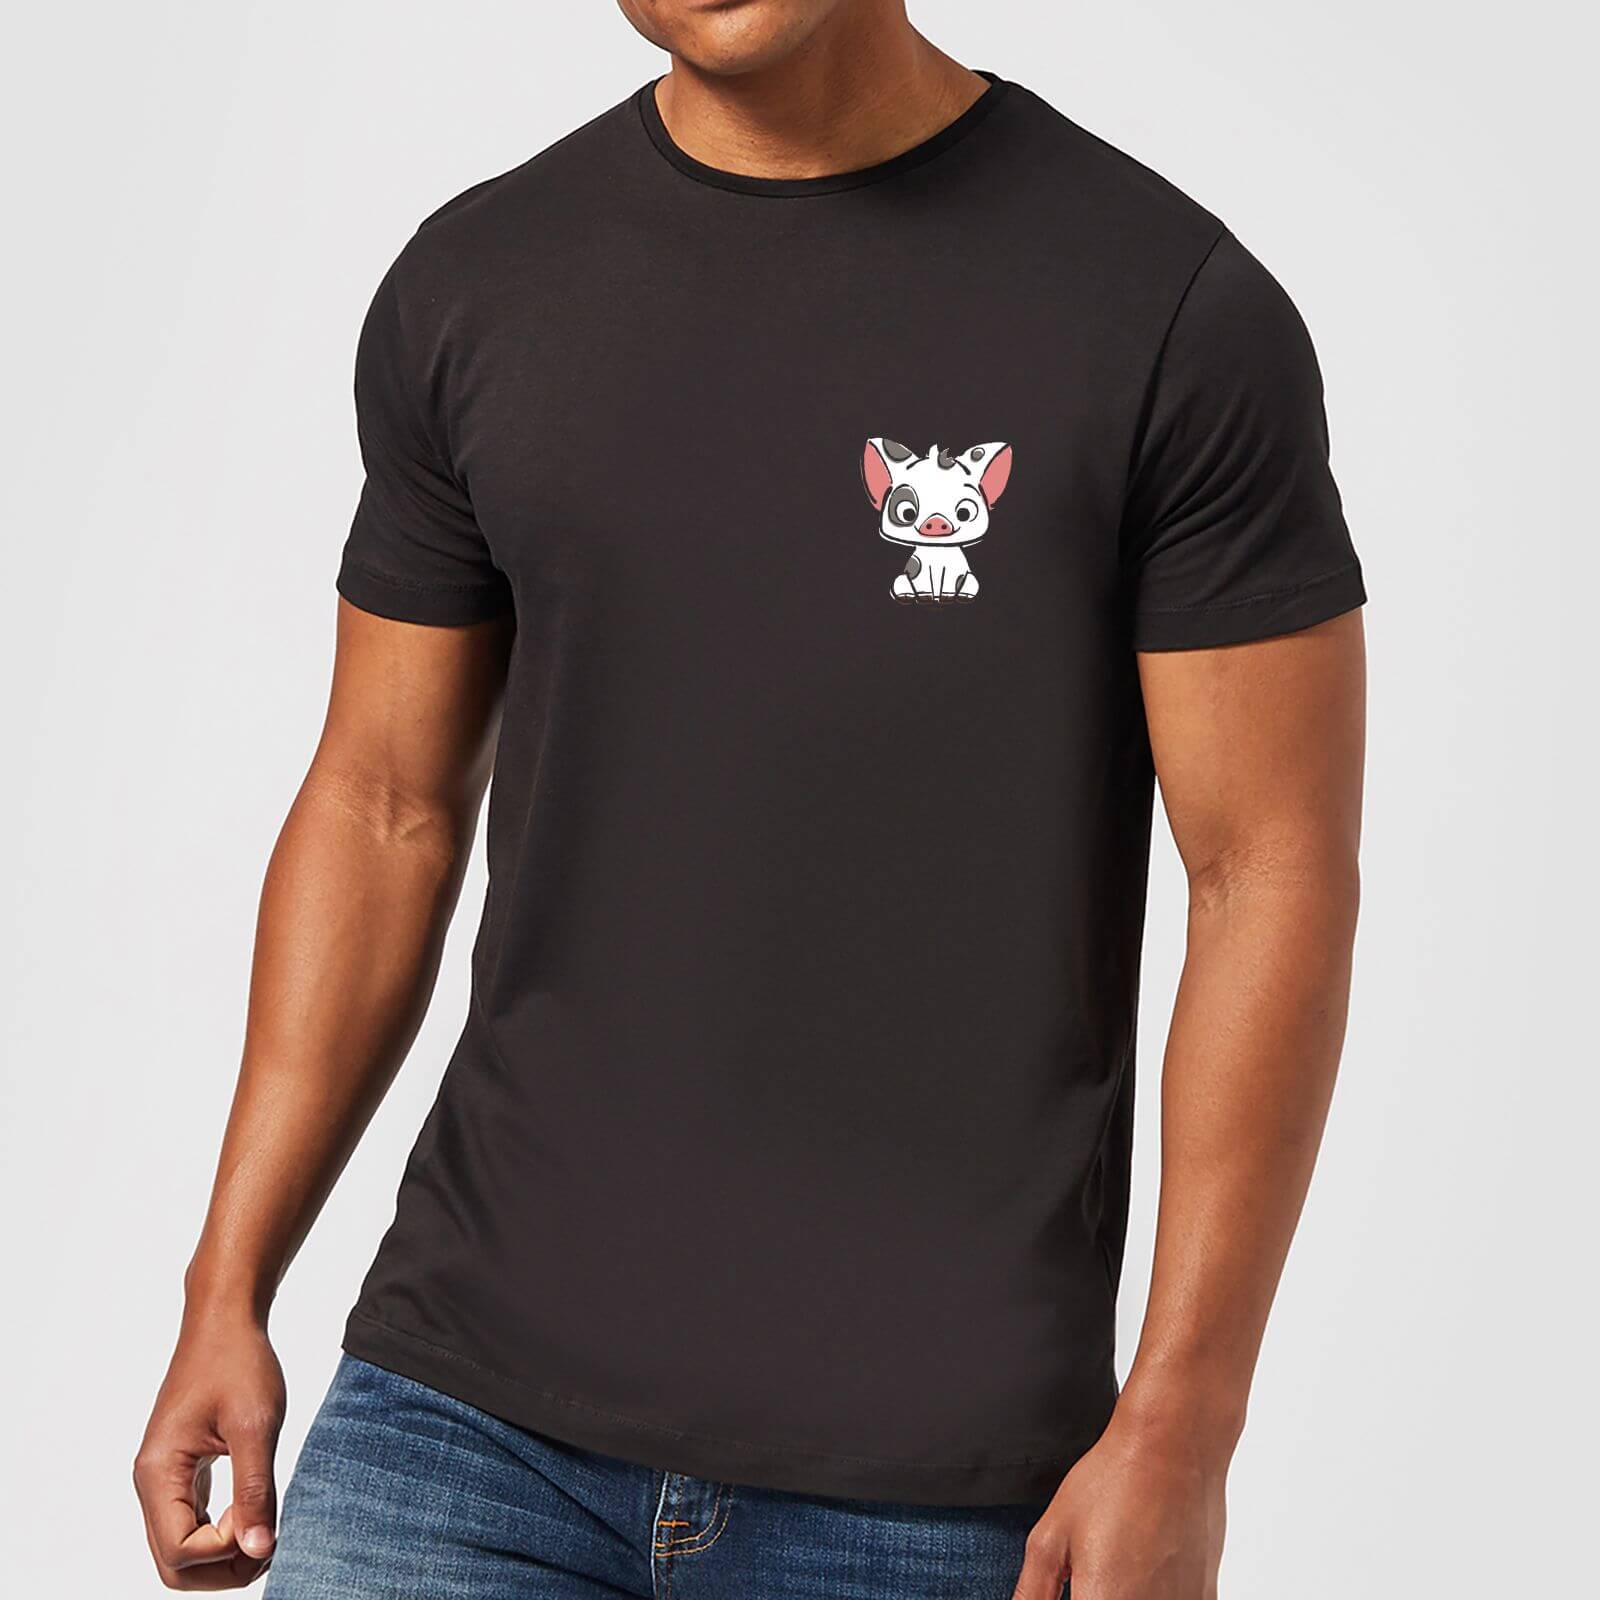 Disney Moana Pua The Pig Men's T-Shirt - Black - XS